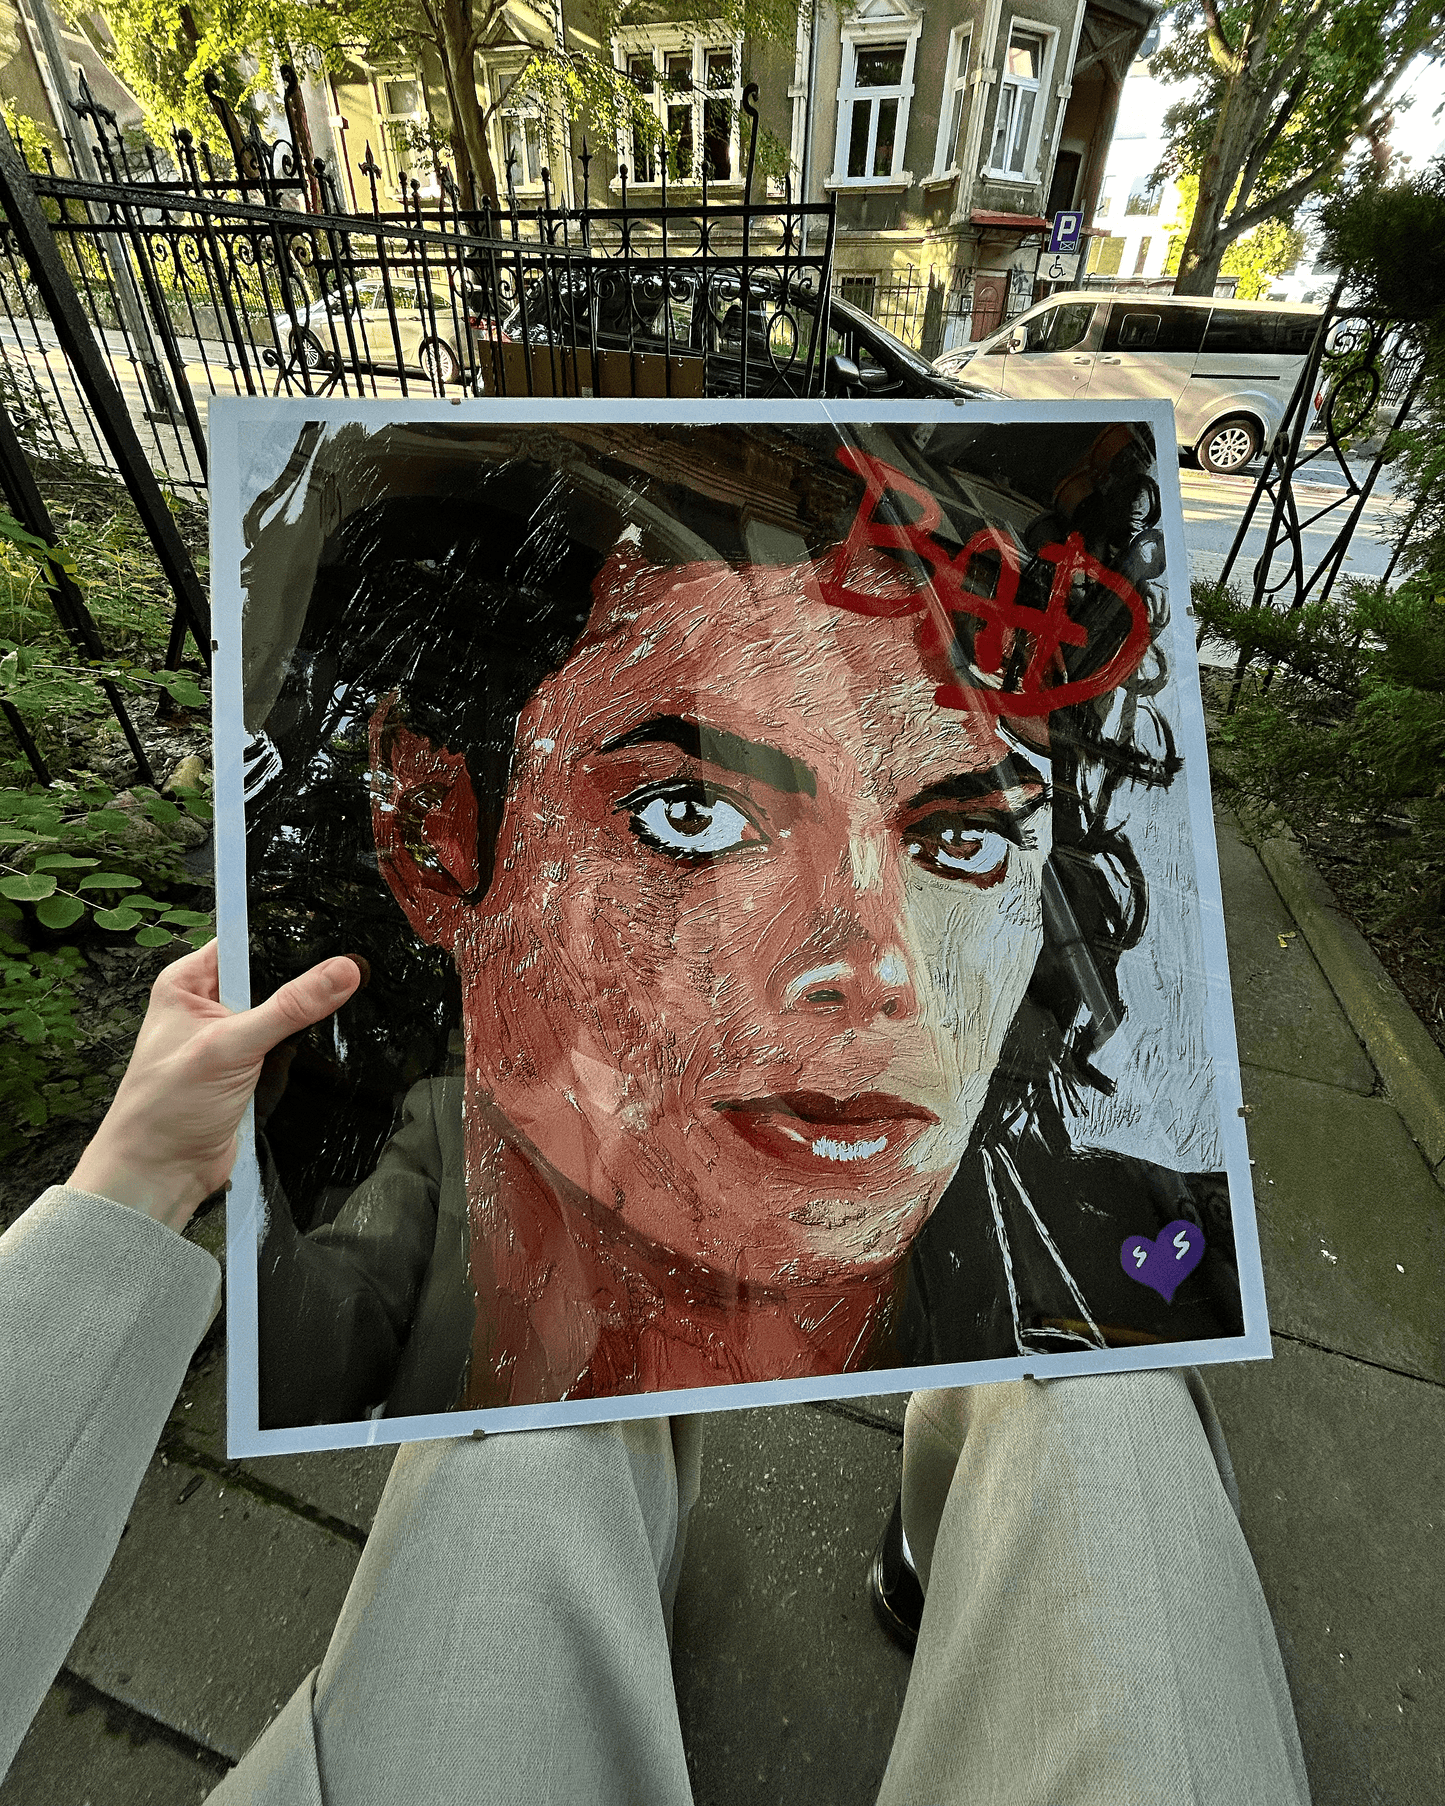 Michael Jackson – Bad Oil Painting Style Digital Poster on Fujifilm Glossy Paper in Plexiglass Frame (50×50 cm)